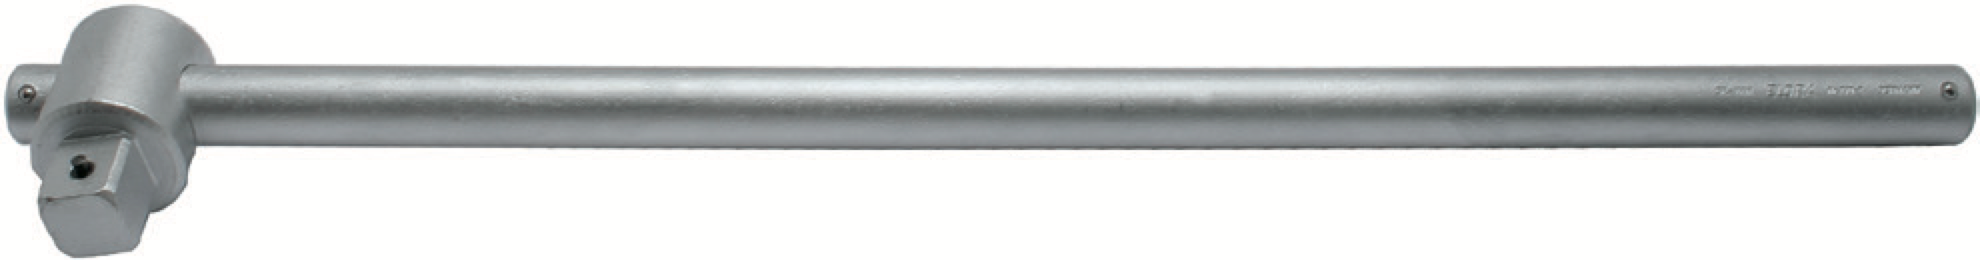 ELORA 780-2 Sliding T-Bar 1" (ELORA Tools) - Premium Sliding T-Bar from ELORA - Shop now at Yew Aik.